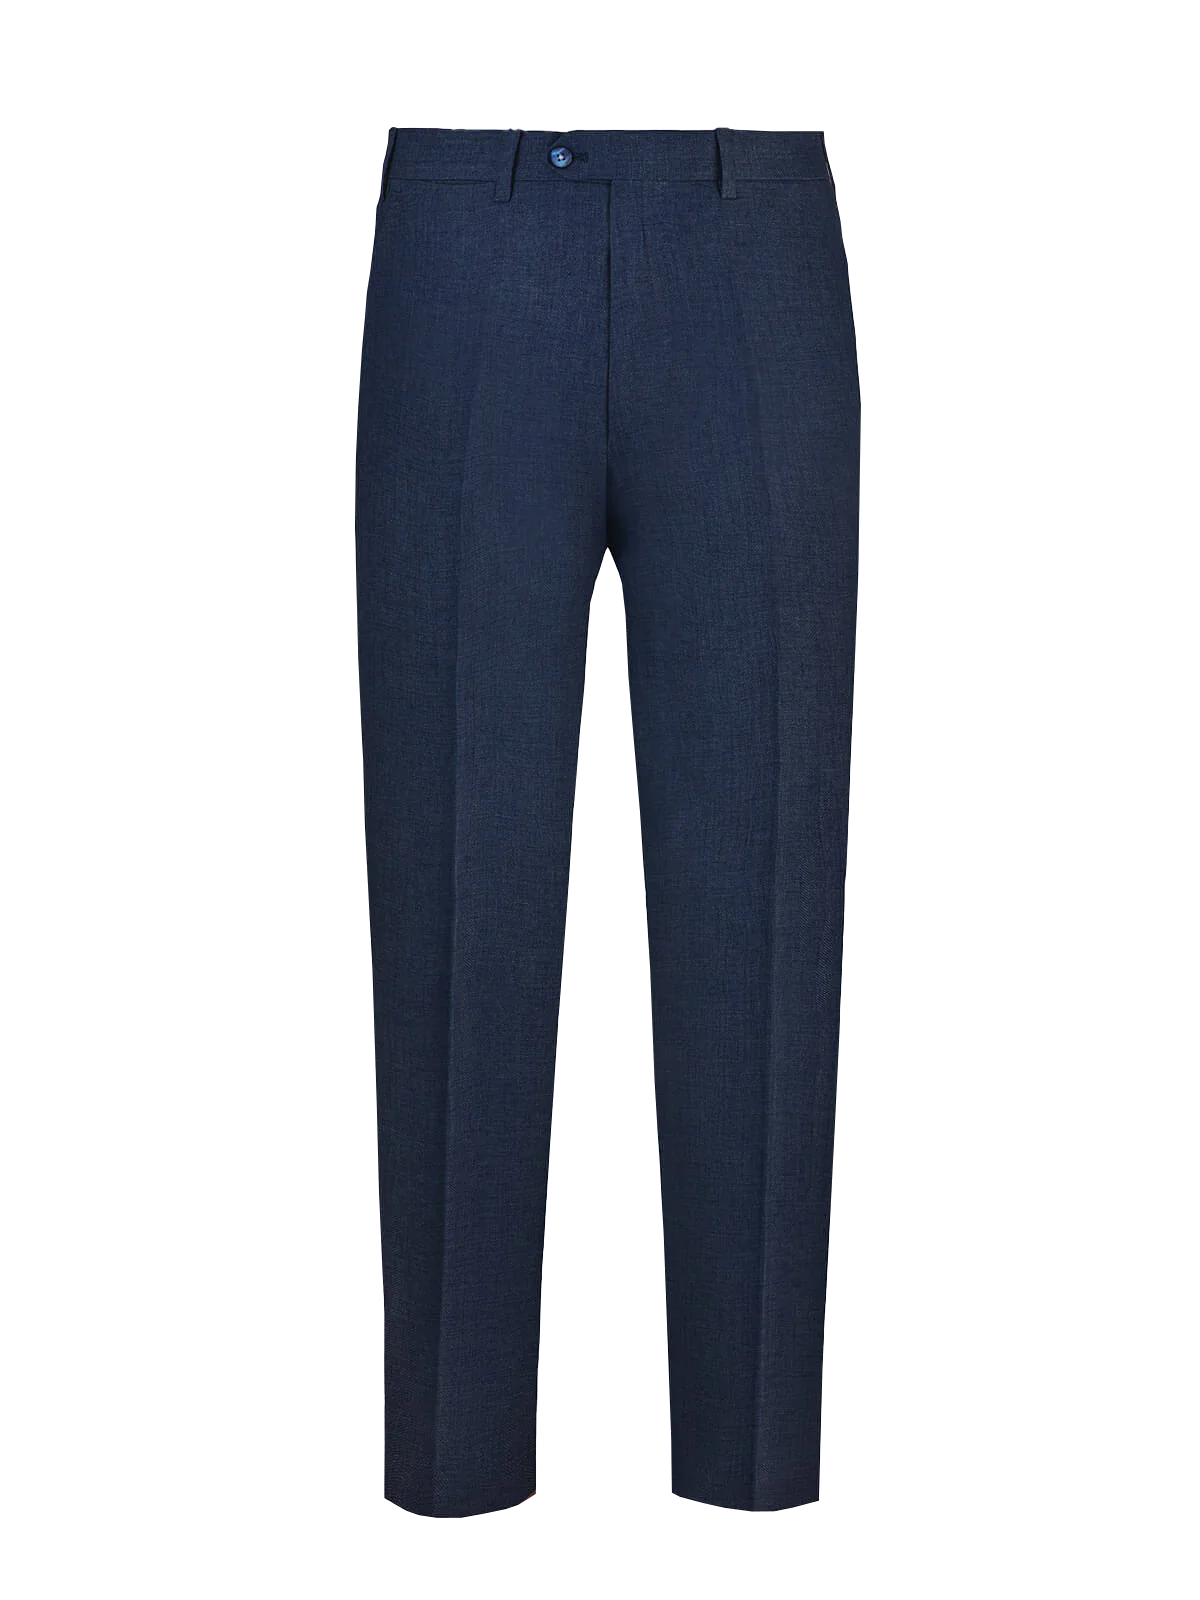 Pantalone Brezza 100% capri for man linen blue trouser front